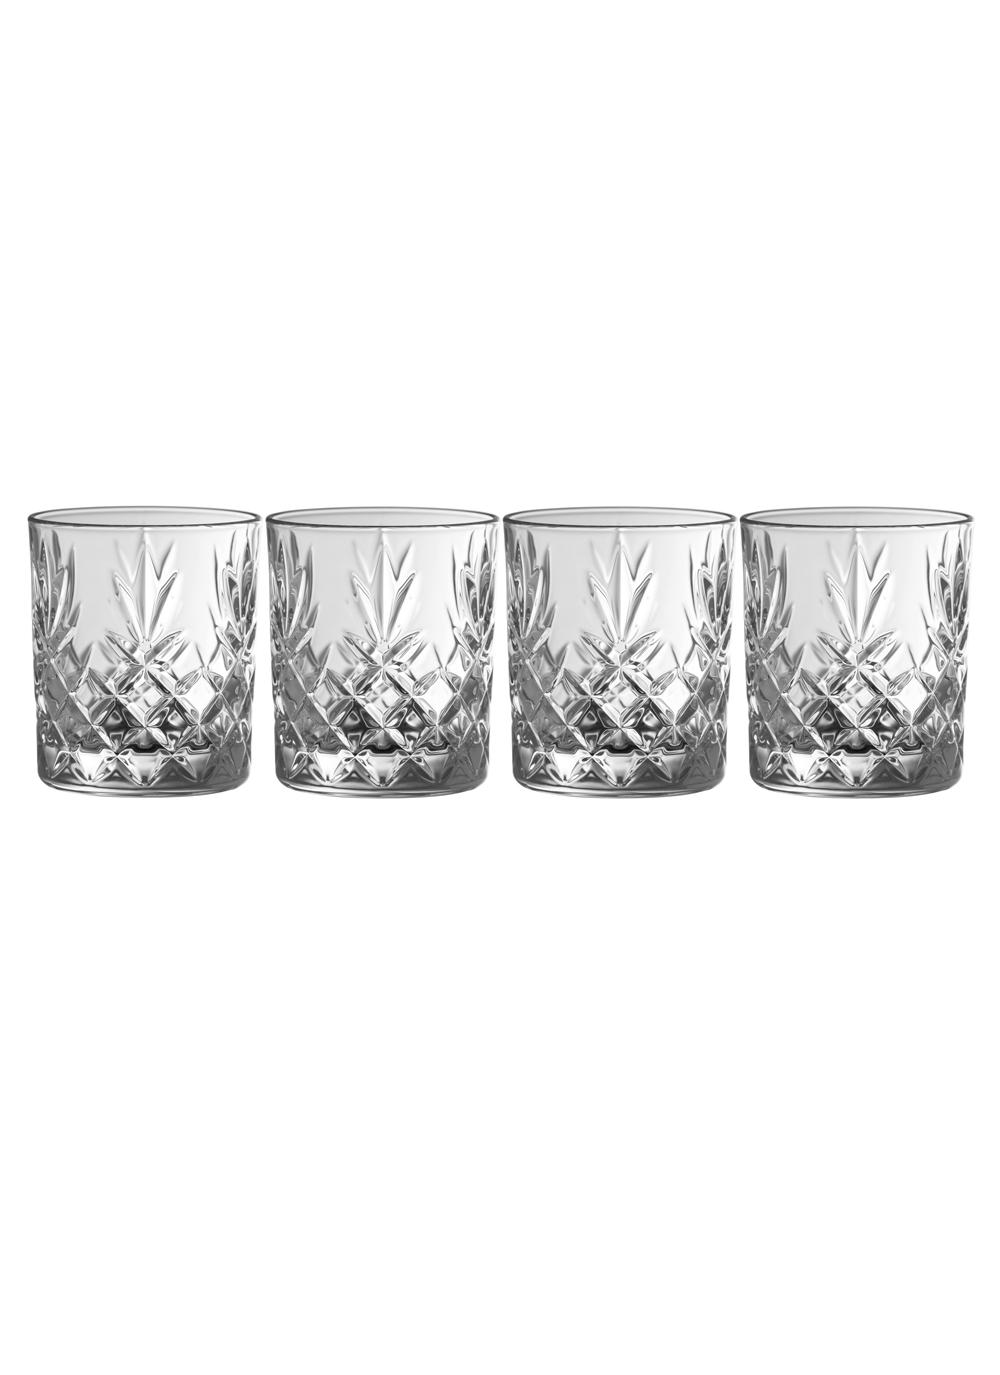 Galway Irish Crystal Renmore DOF Whiskey Tumblers Set of 4 Glasses RRP £39.50 